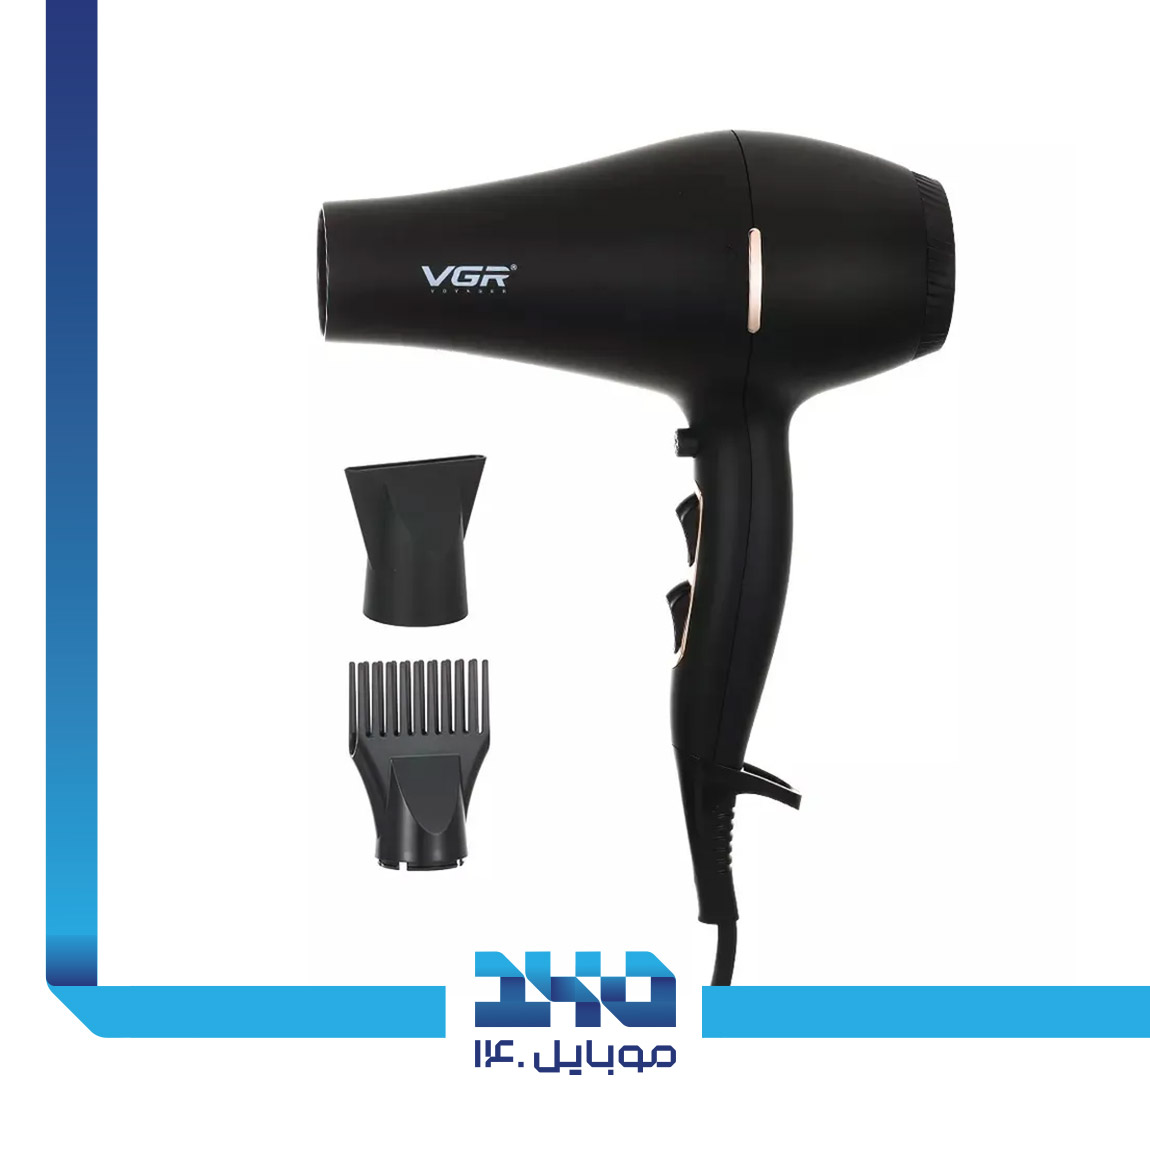 VGR V-433 Hairdryer 1